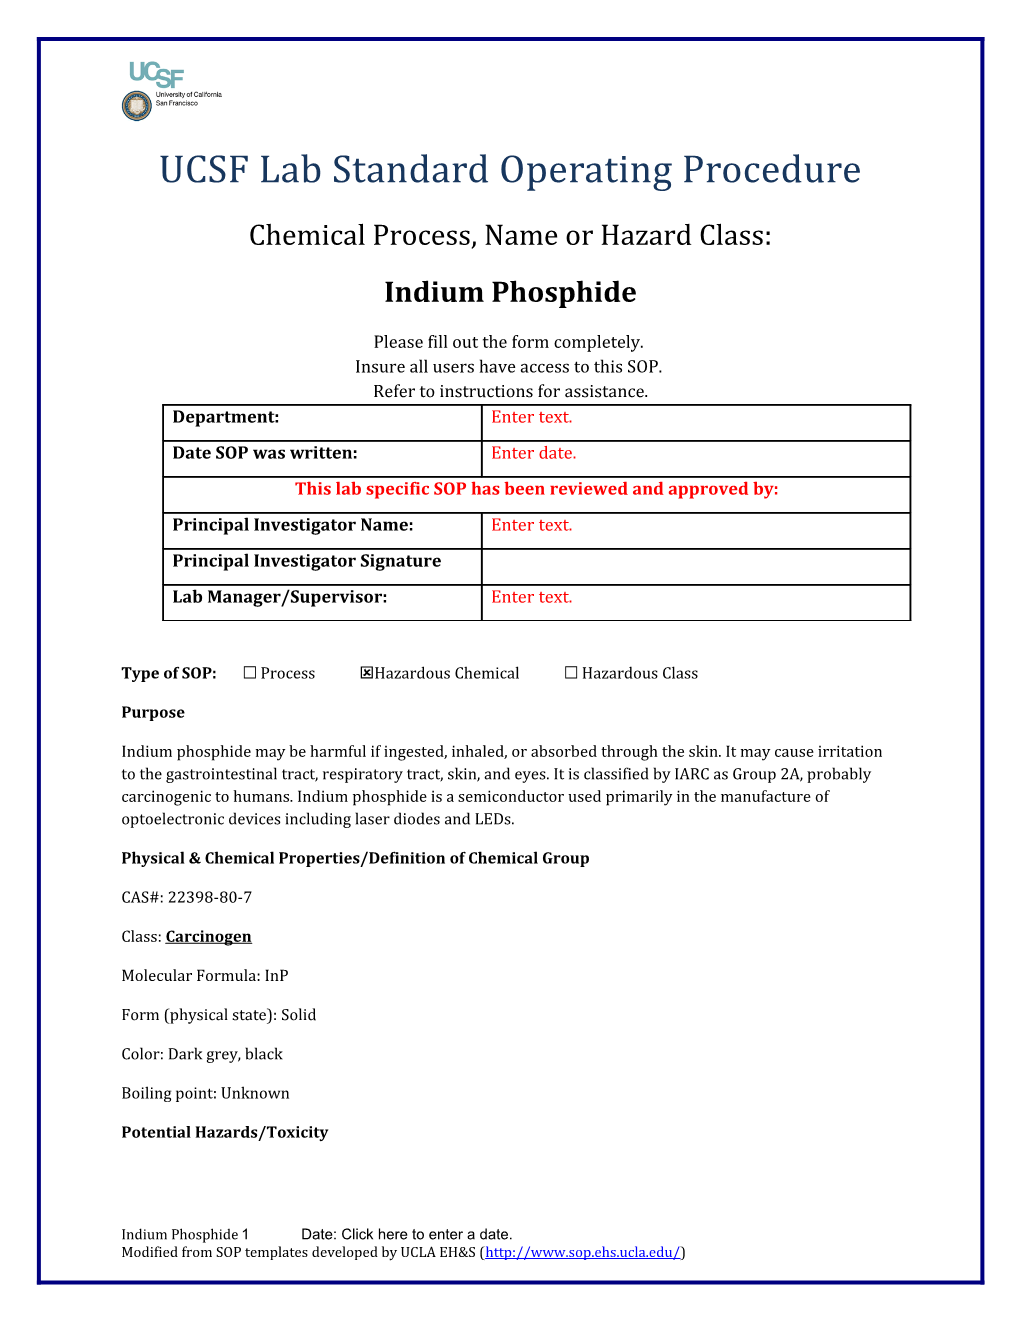 UCSF Lab Standard Operating Procedure s30